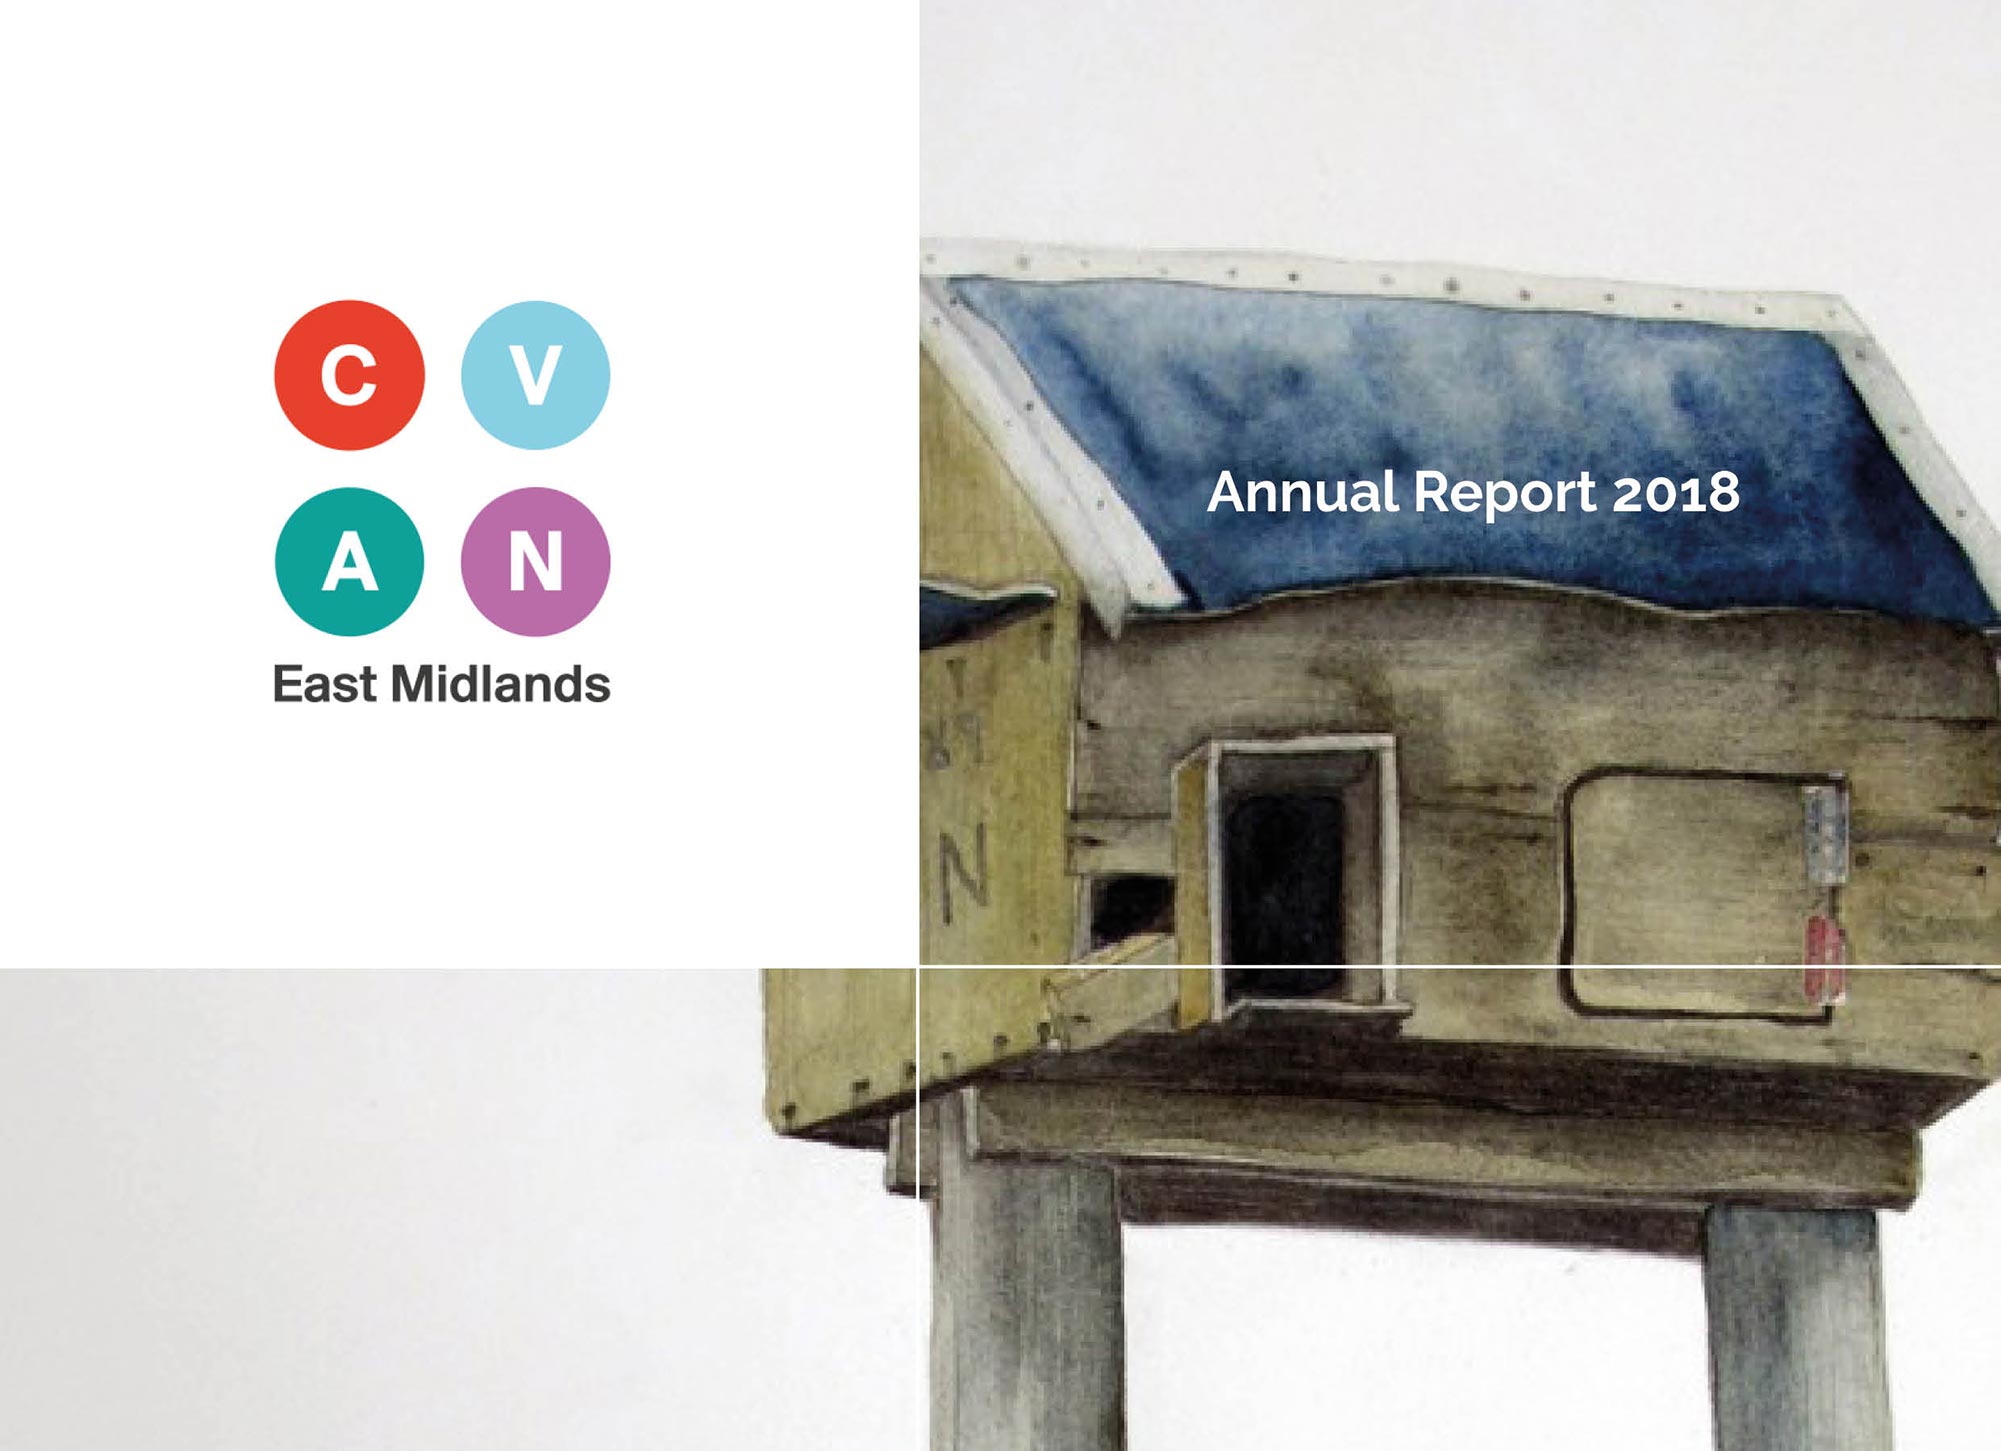 CVAN EM Annual Report 2018